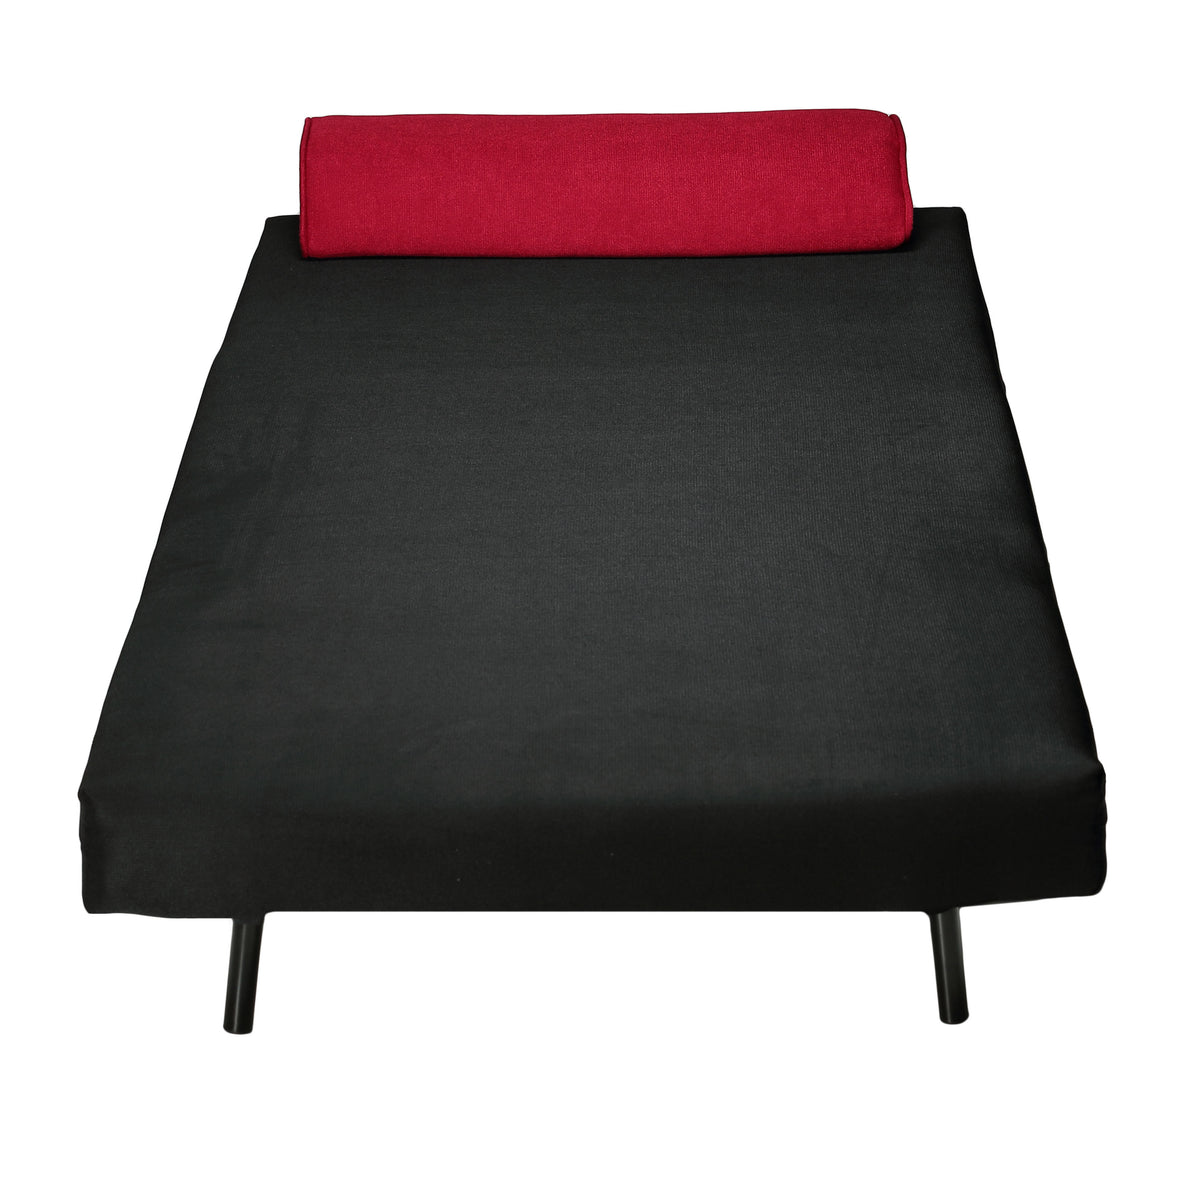 Cortesi Home Savion Black Fabric Convertible Accent Chair Bed